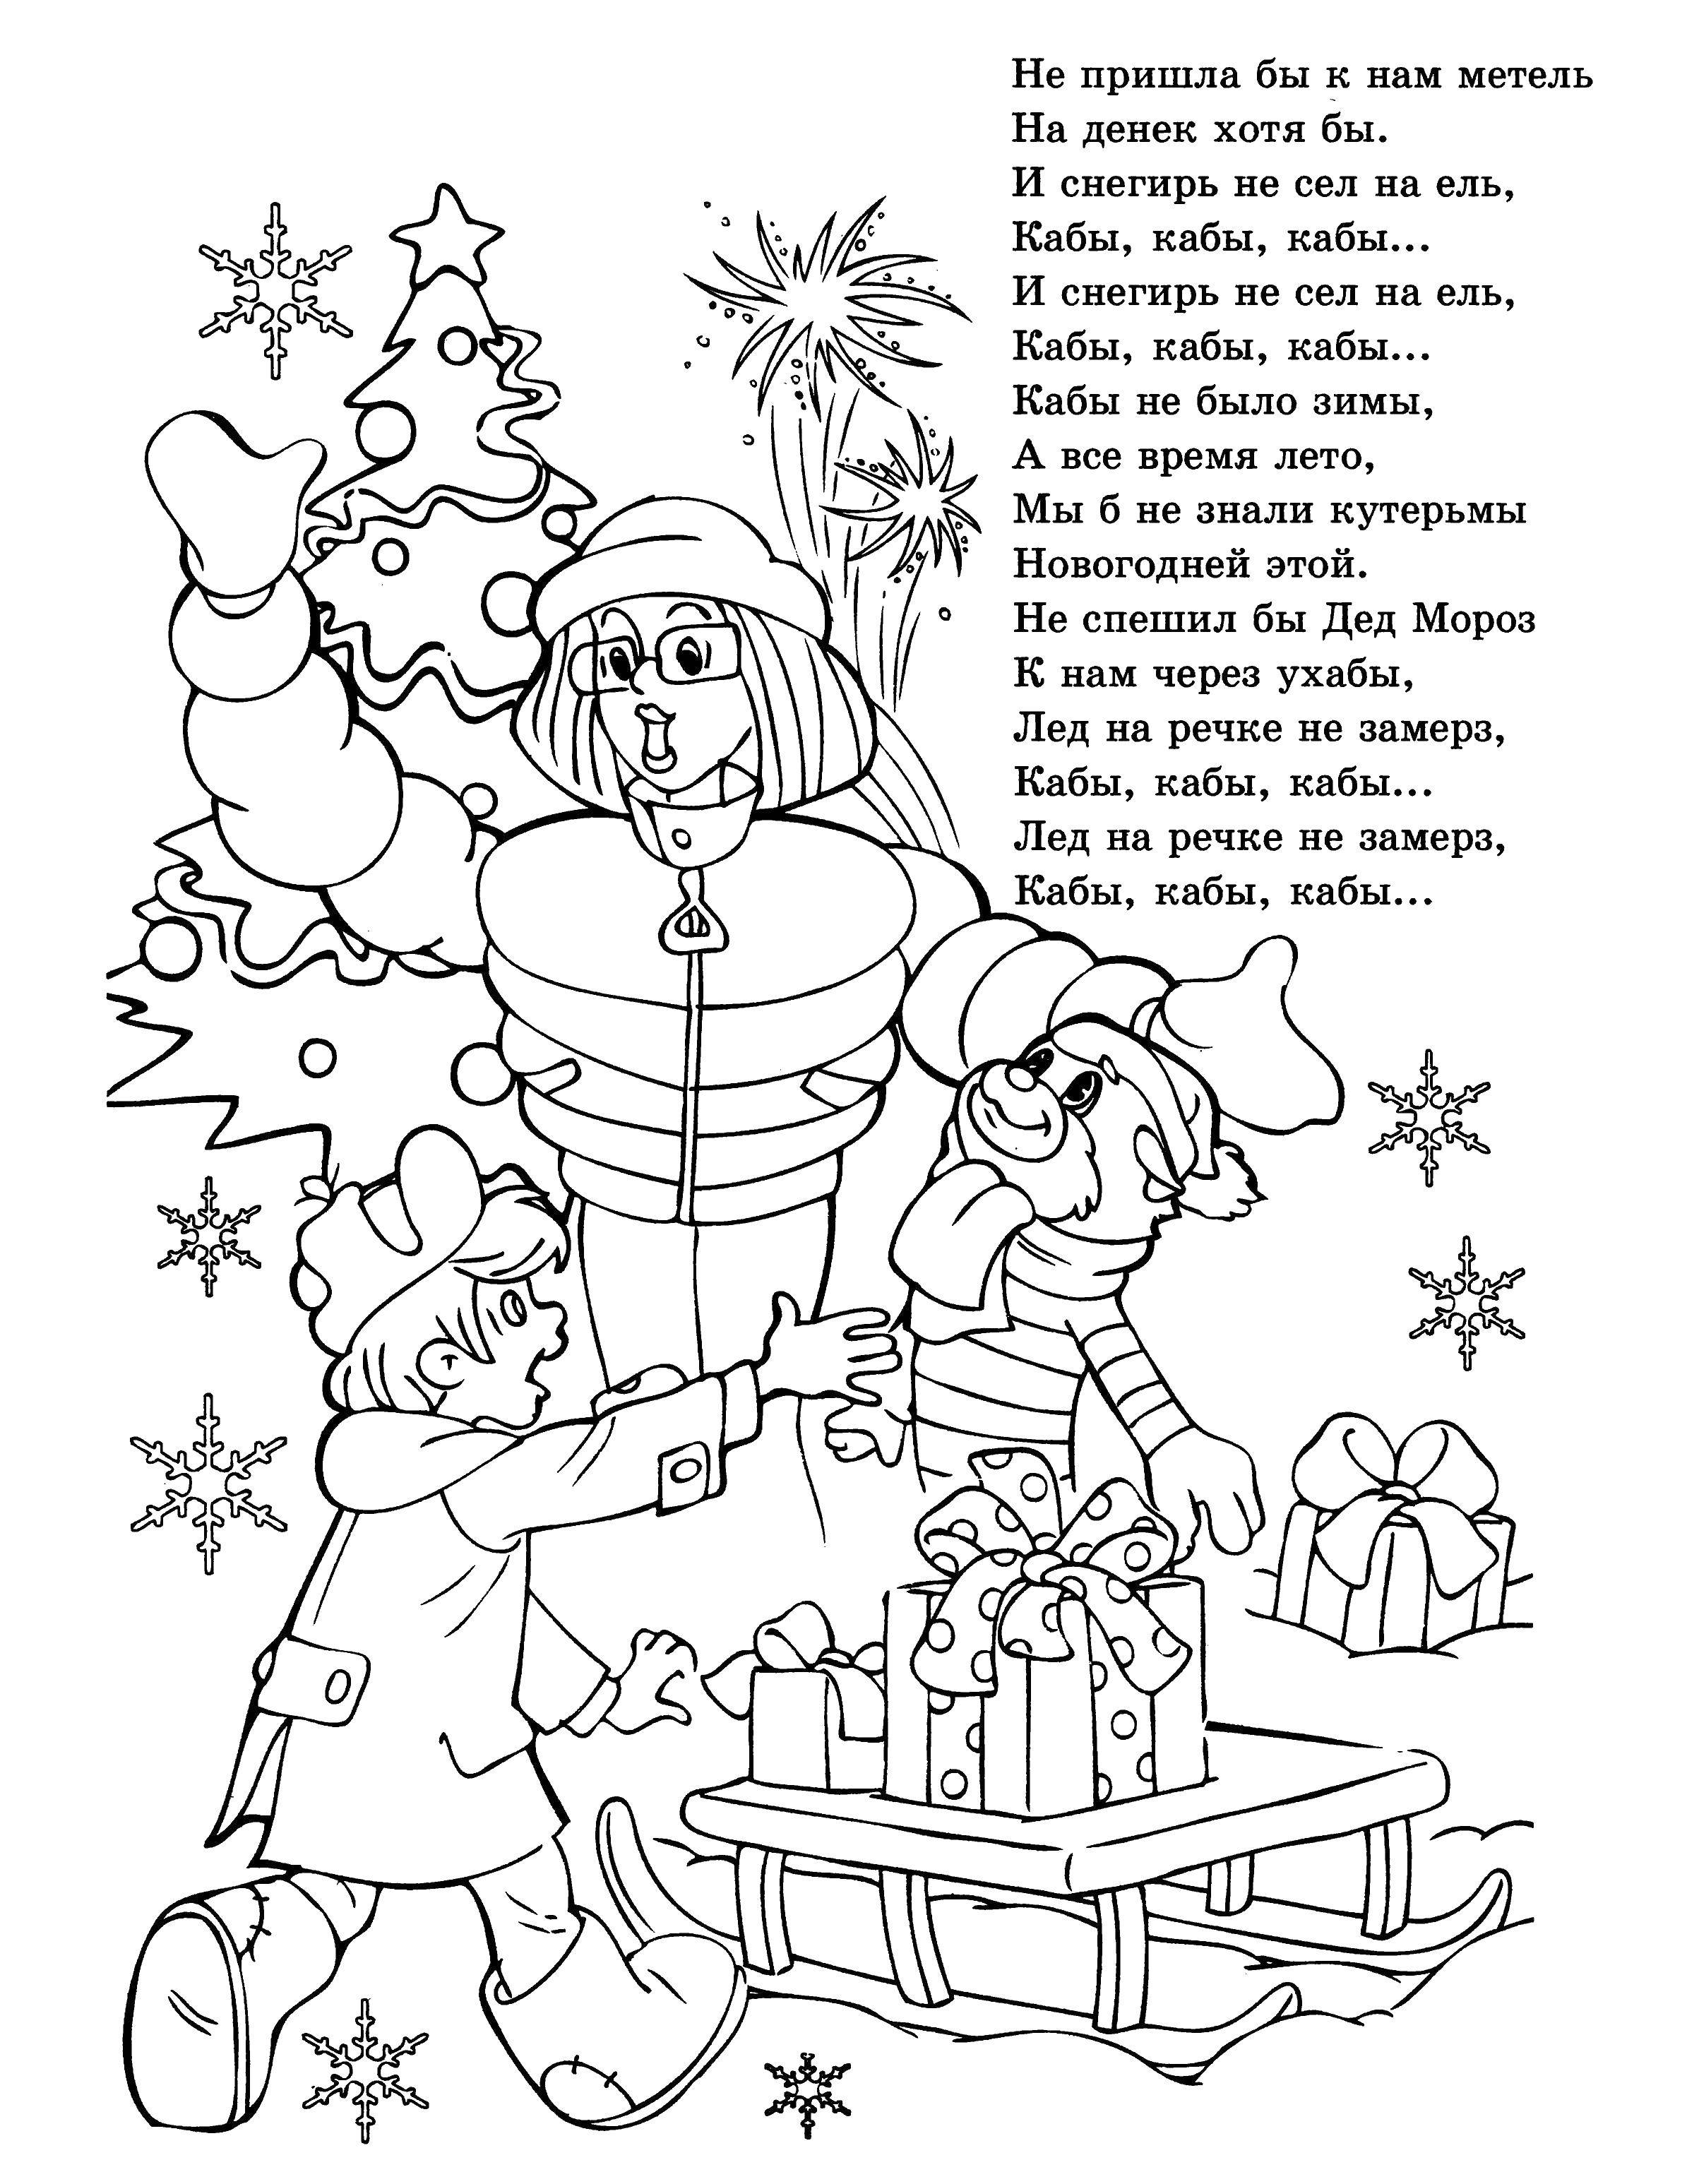 Название: Раскраска Сказка почтальон печкин. Категория: Сказки. Теги: кот матроскин, мальчик дядя федр, мама, елка, снег.